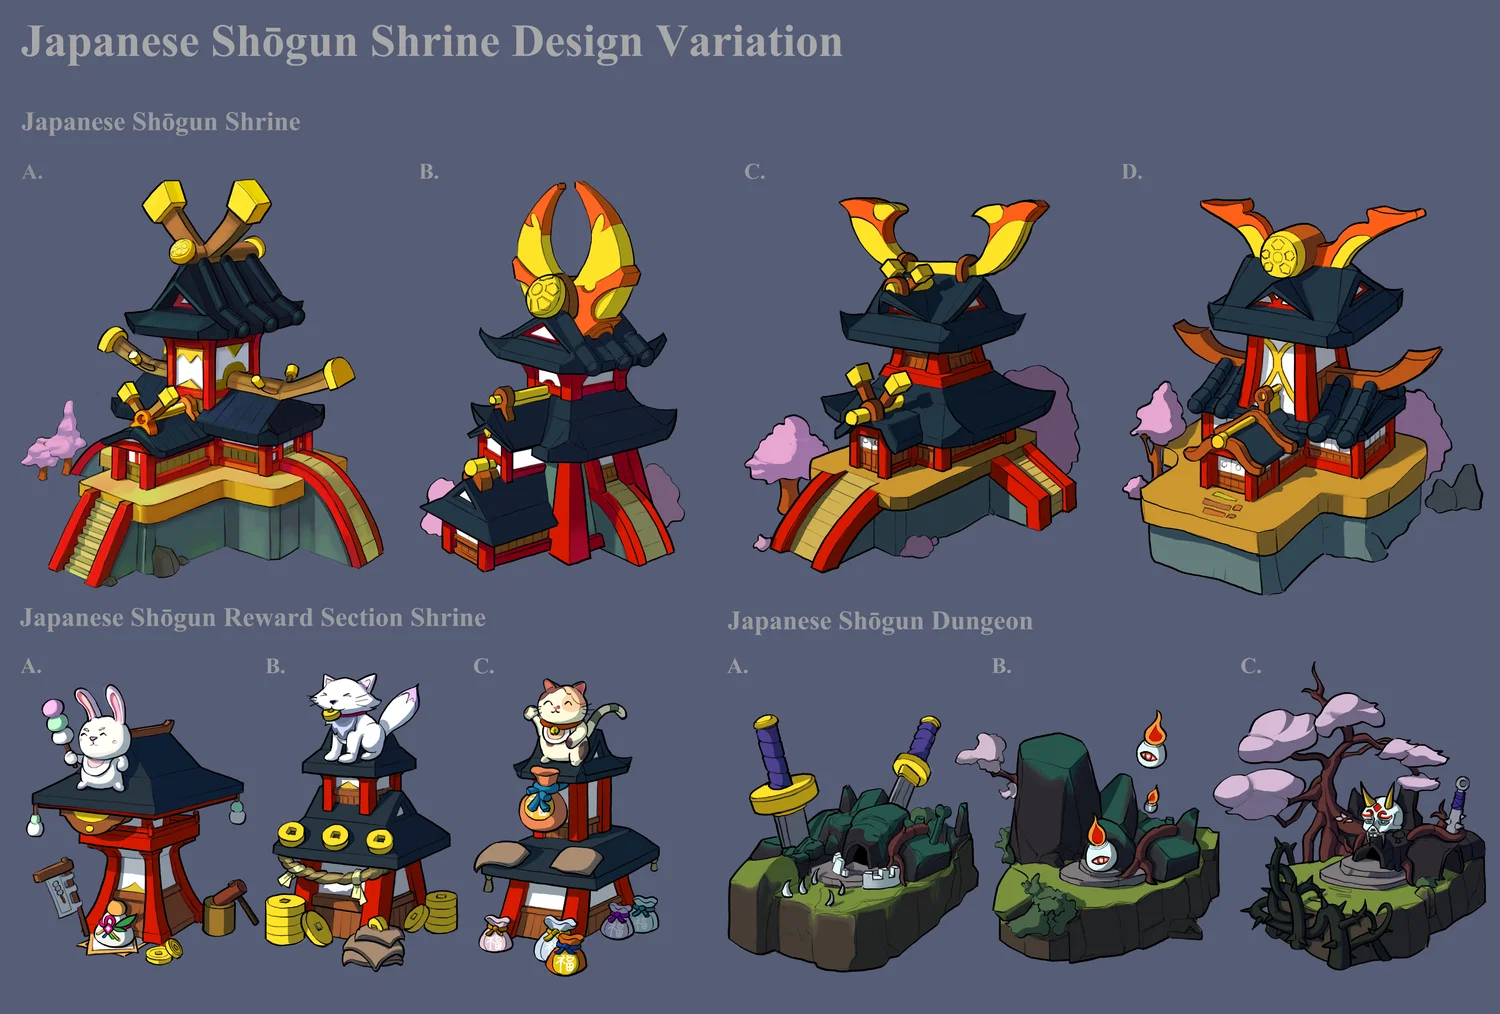 Japanese Shōgun Shrine Design Variation